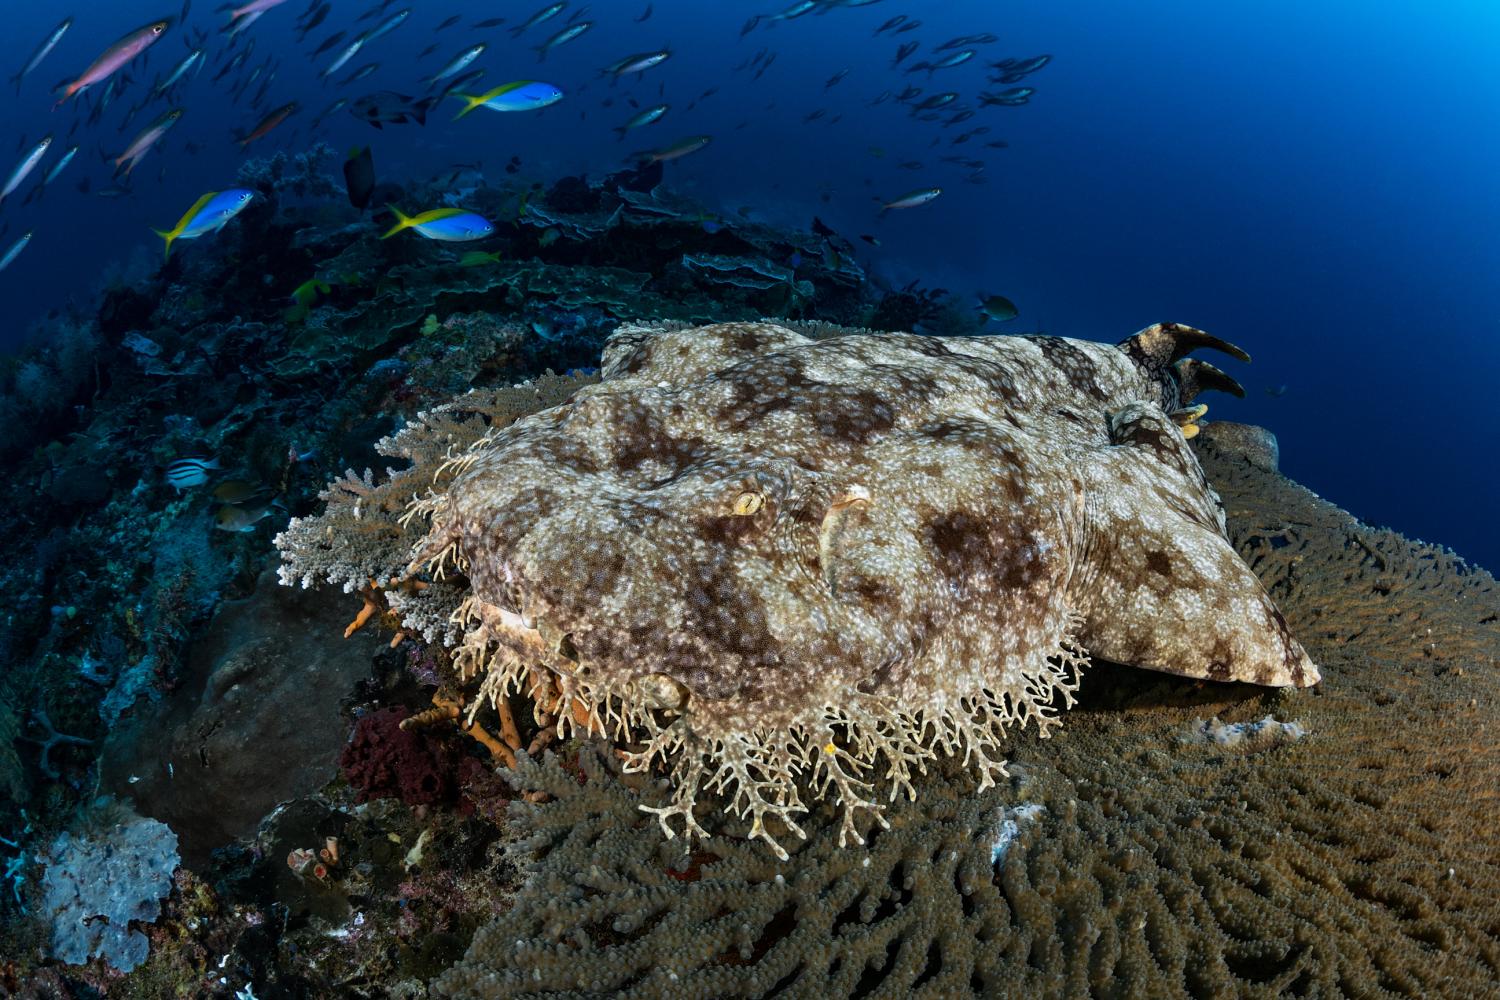 Wobbegong | Coral Reef Image Bank Sharks | © Fabrice Dudenhofer